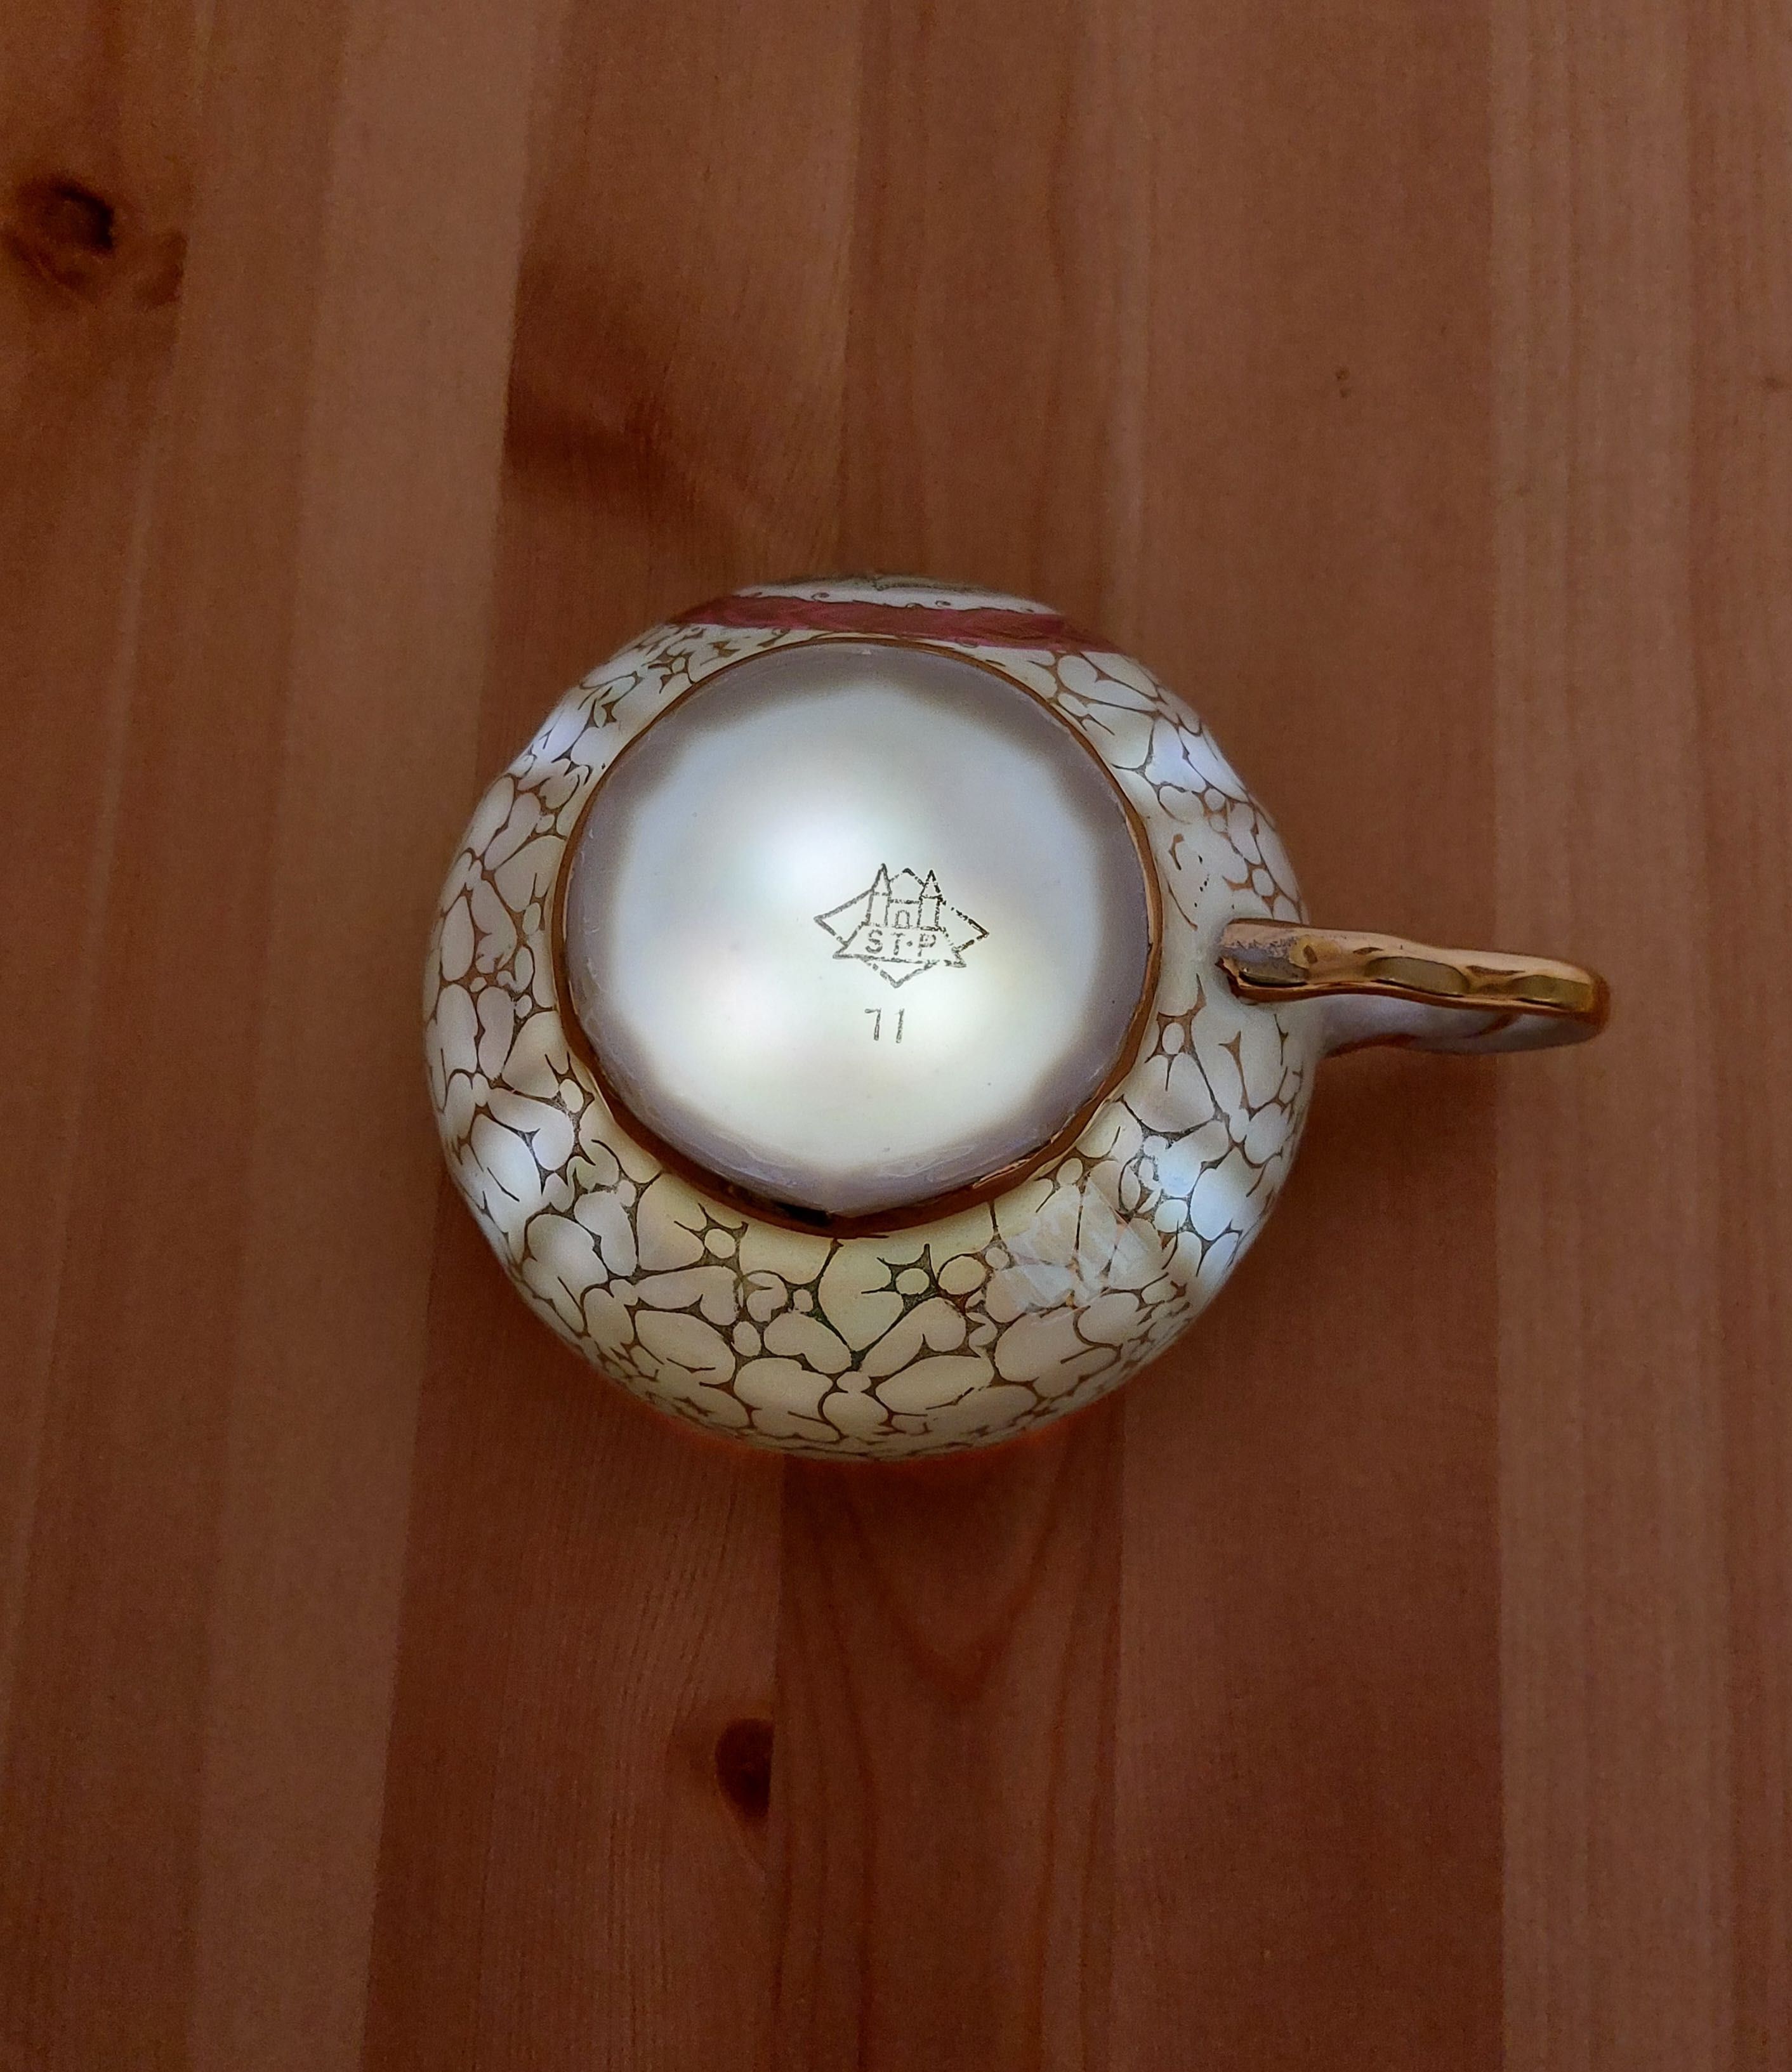 Чайное трио,  чайник кофейник фарфор Германия 50-е годы 20 века